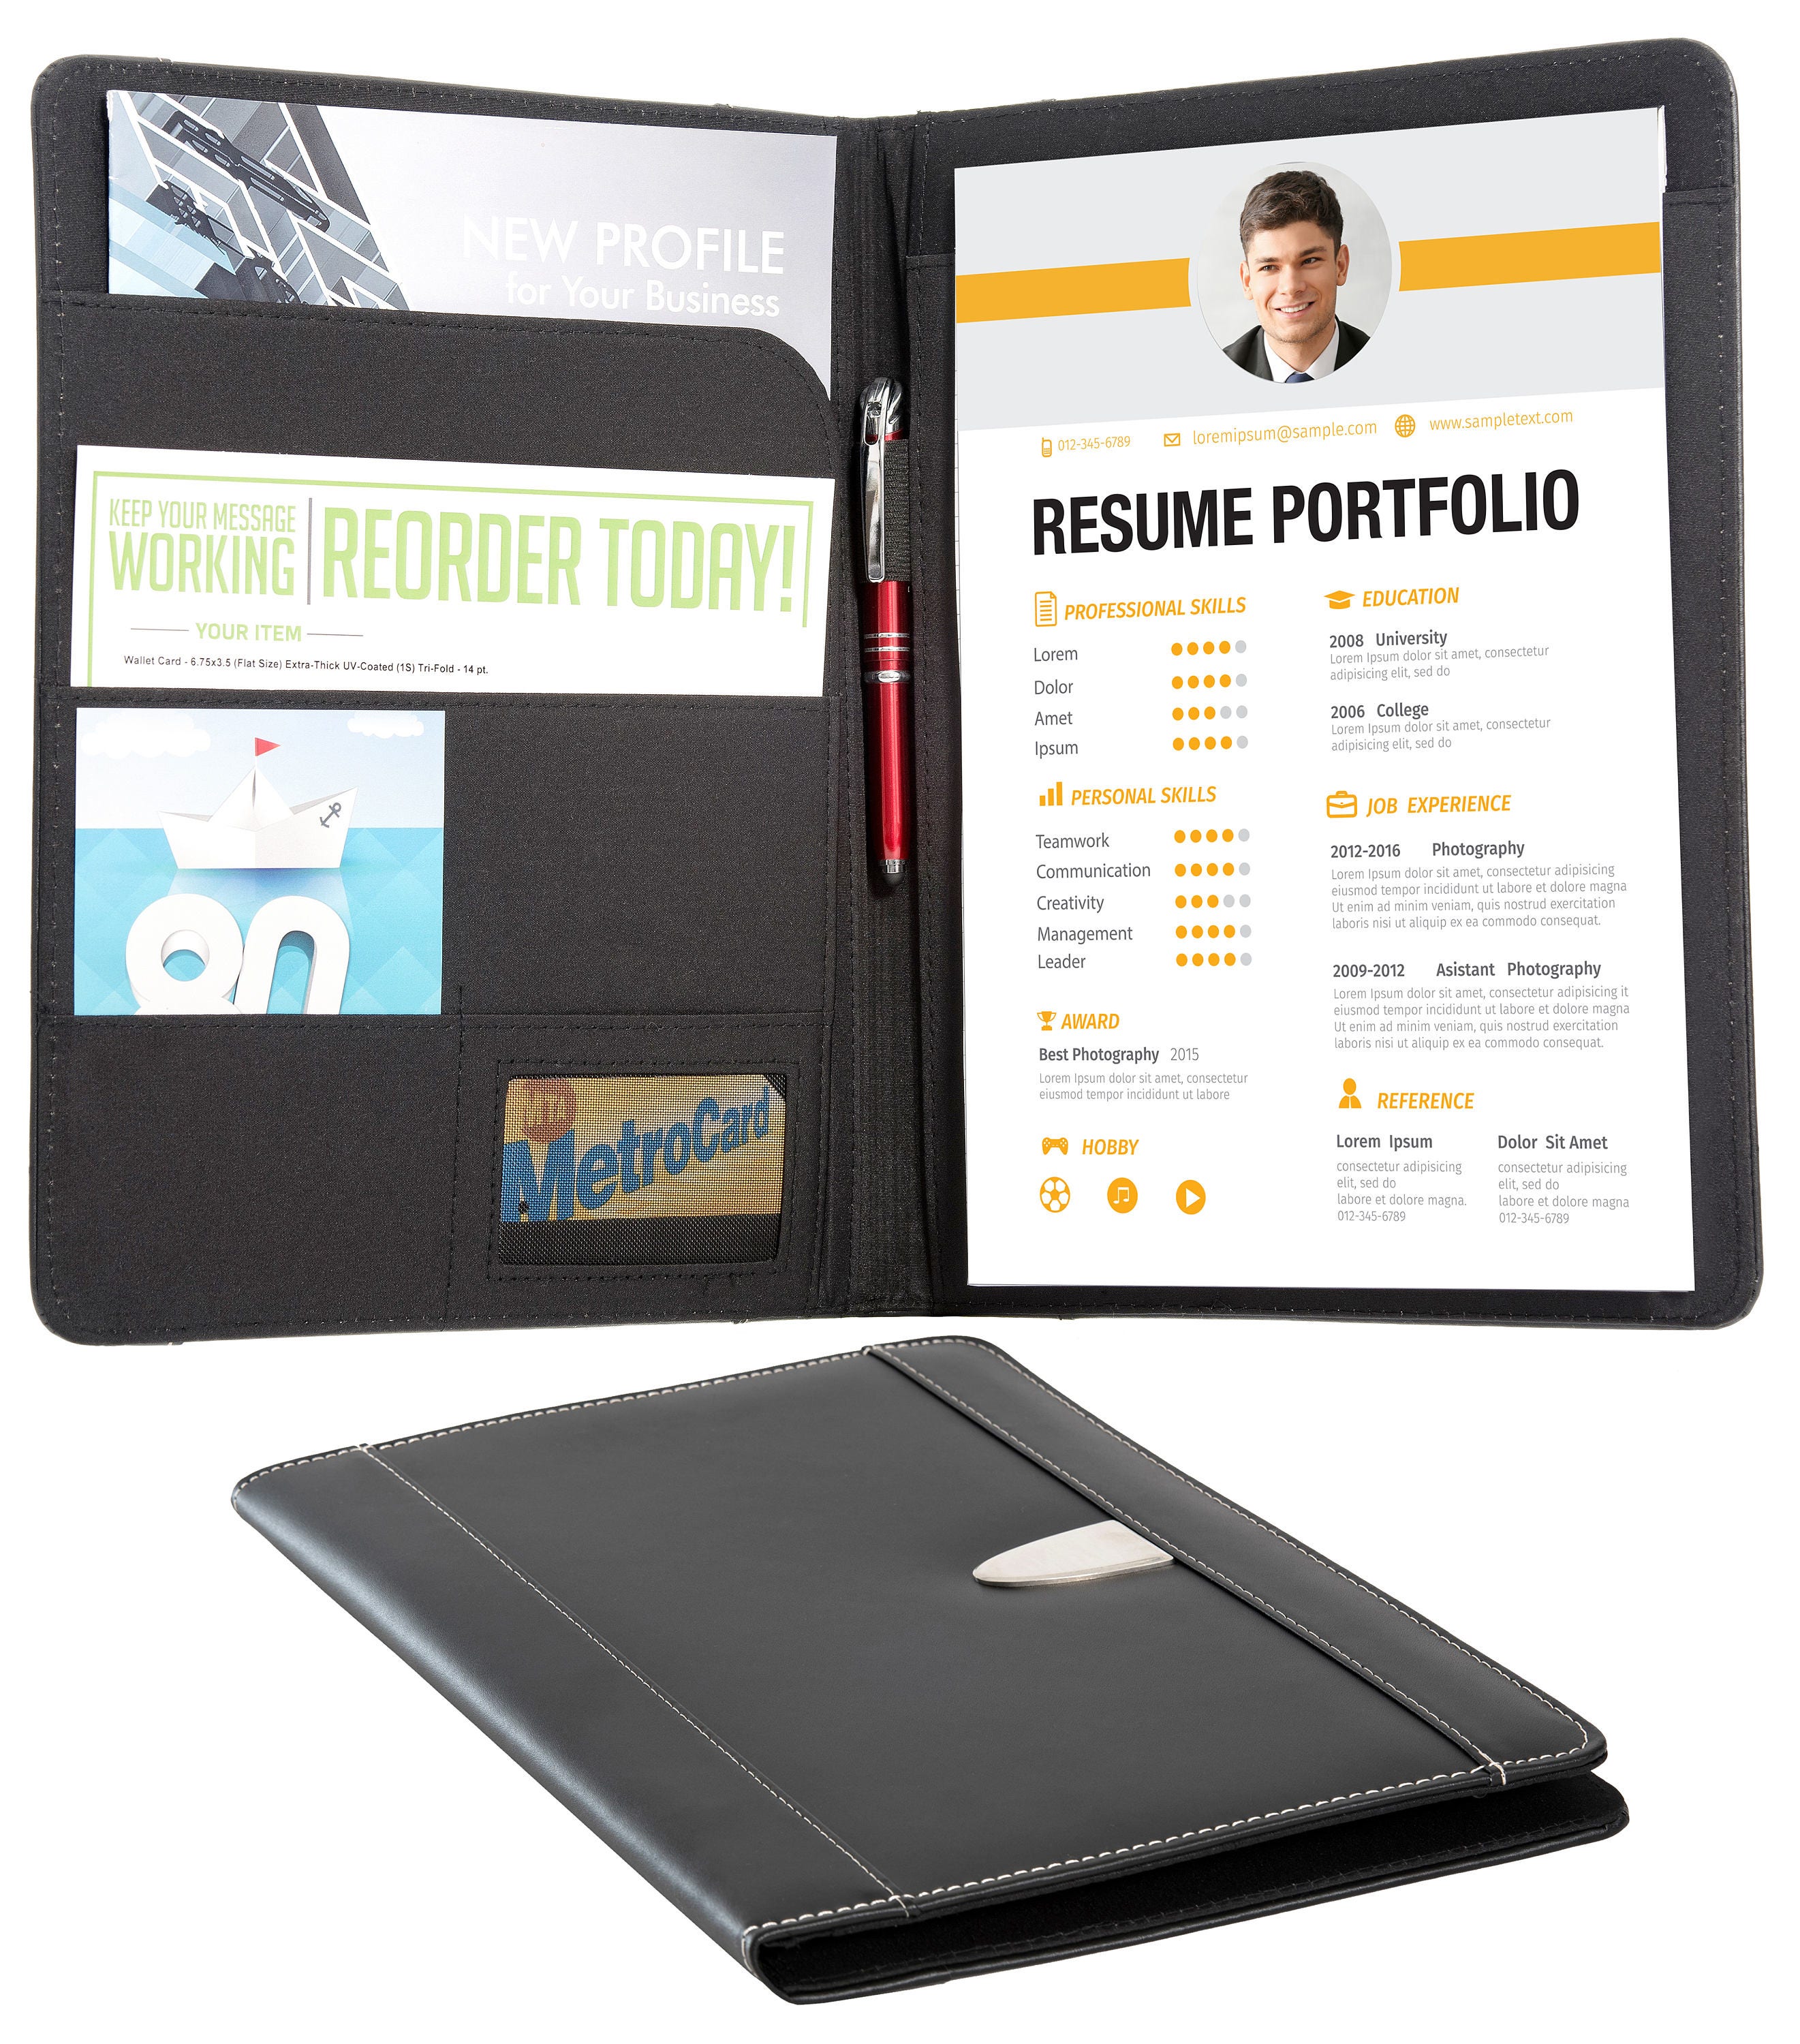 Zippered Padfolio A4 PU Leather Portfolio Organizer for Interview Resume Document Planner Agenda Schedule Tablet Sleeve Holder or Men Women